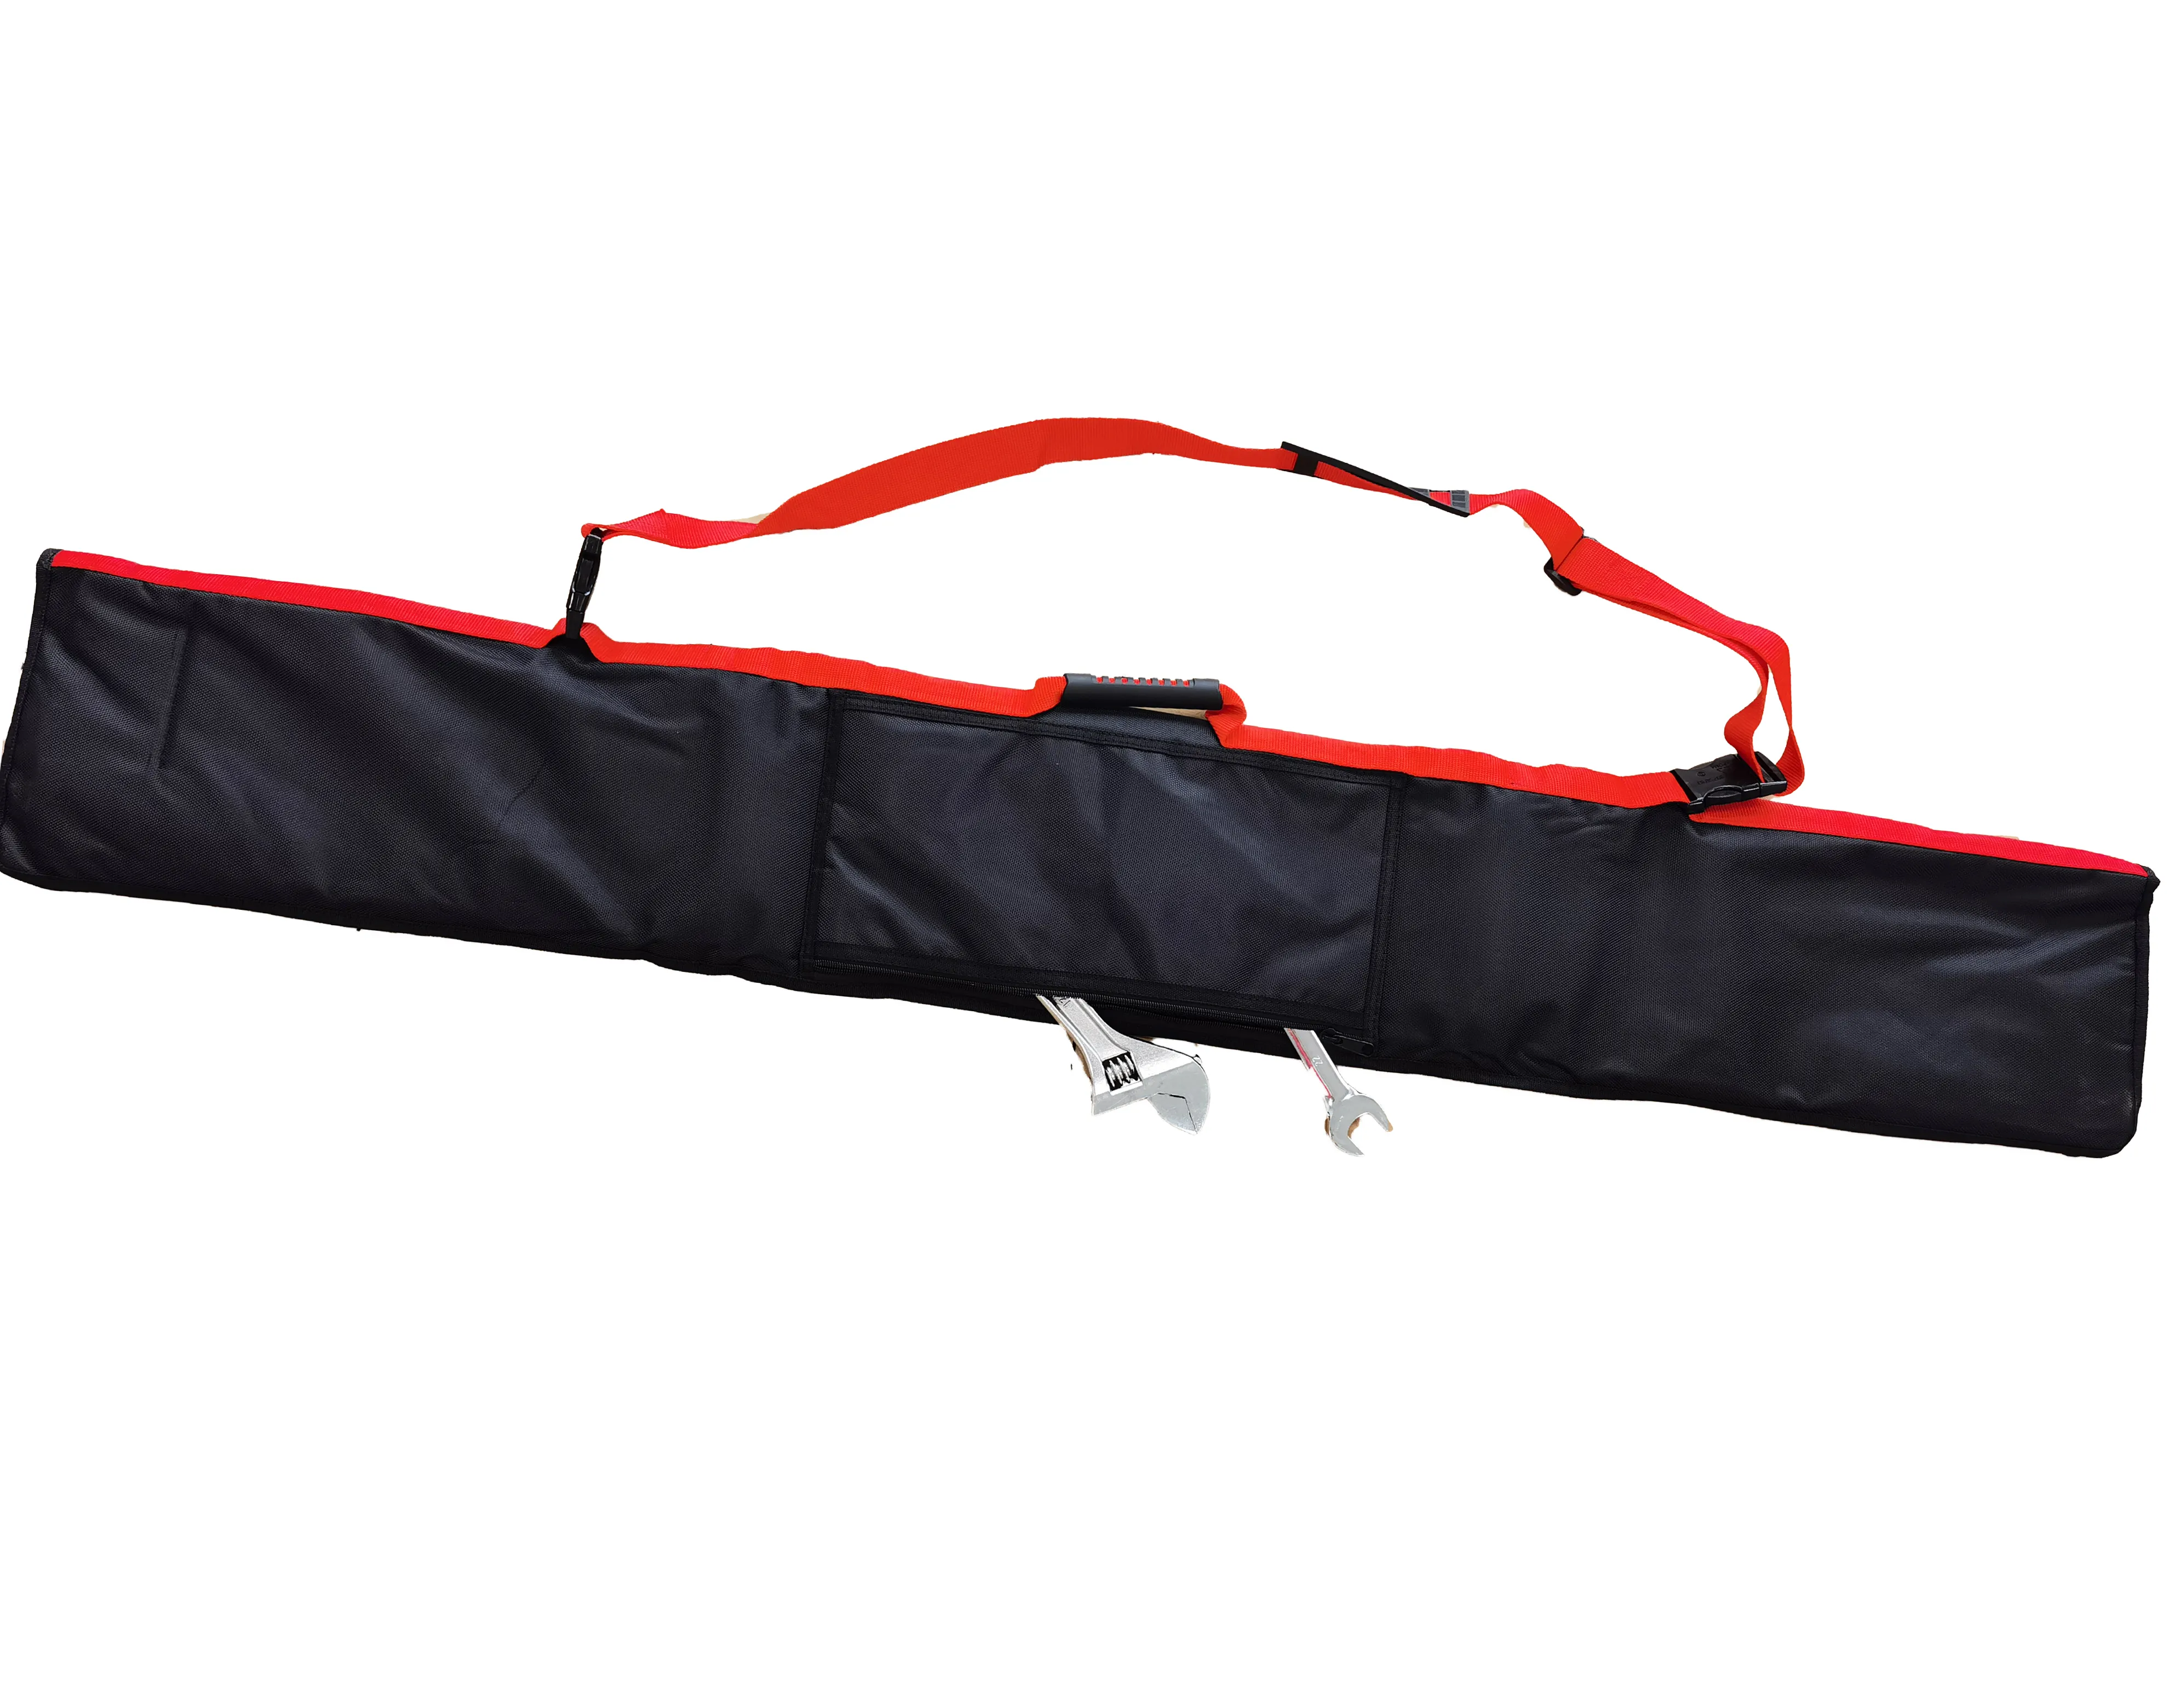 1.5m Track Saw Guide Rail bag for Makita or Festool Track Saws Rip Cuts Straight Cuts